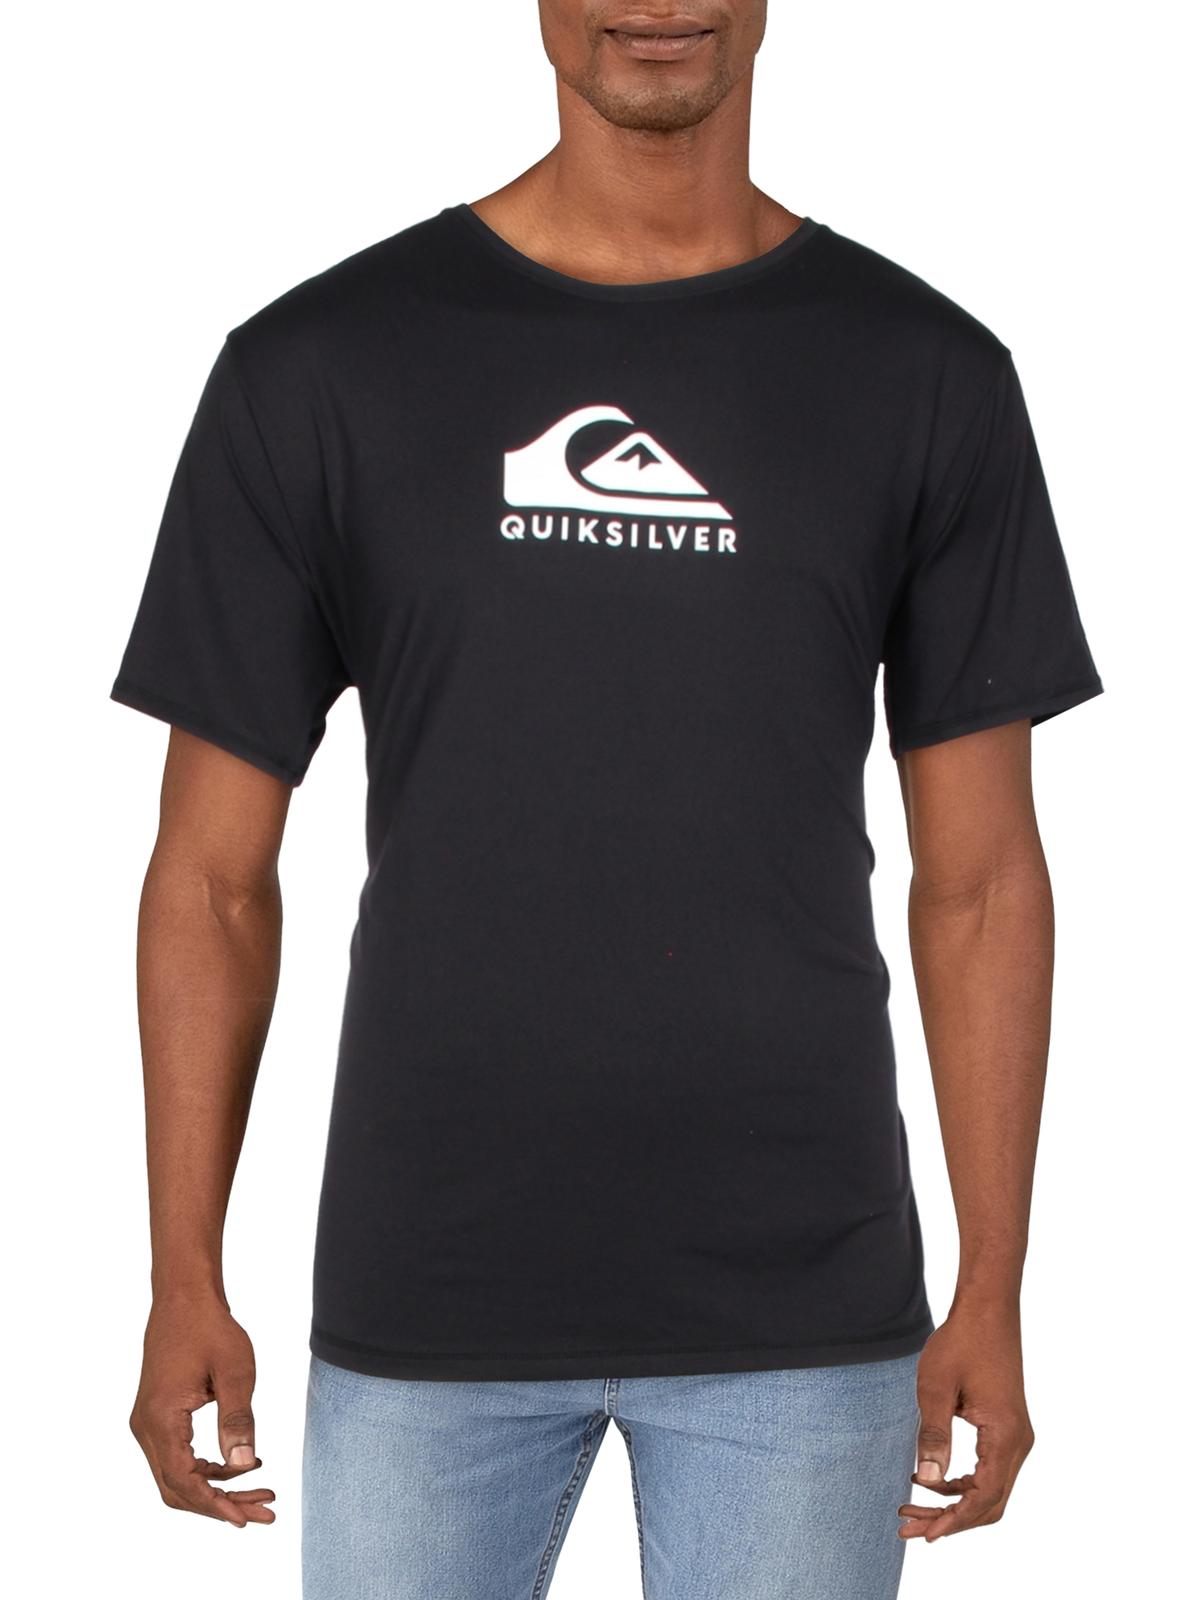 QUIKSILVER Mens Crewneck Short Sleeve Graphic T-Shirt